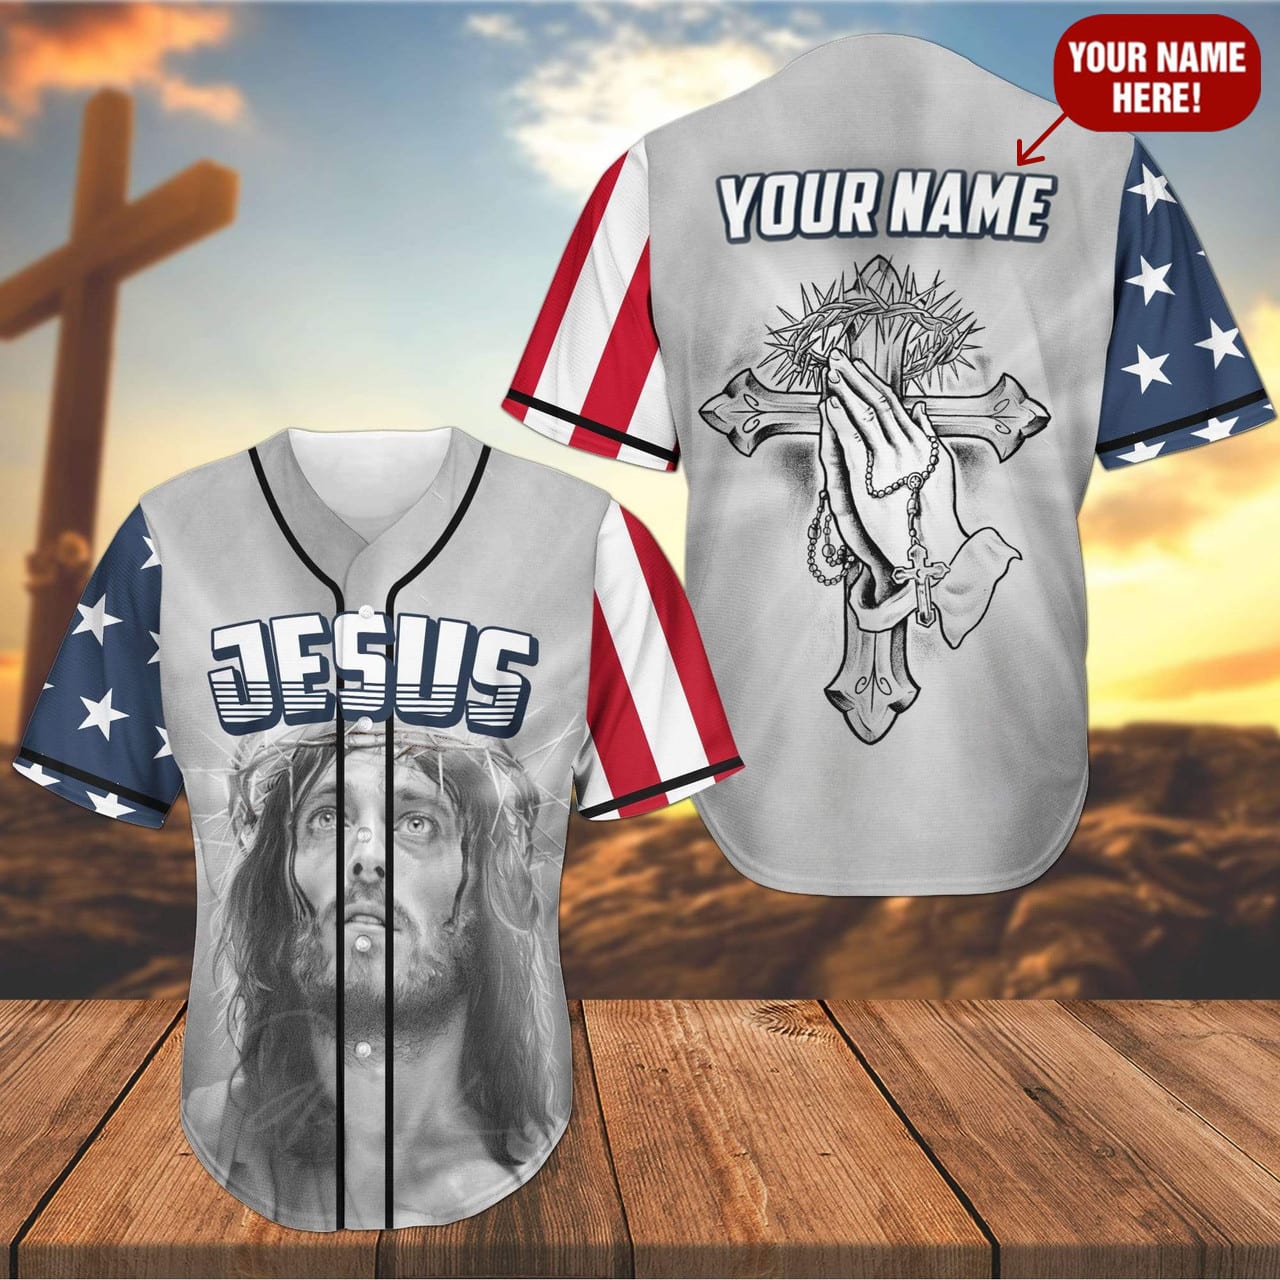 Cross/ Christ/ Pray Baseball Jersey - The Savior Custom Baseball Jersey Shirt For Men Women